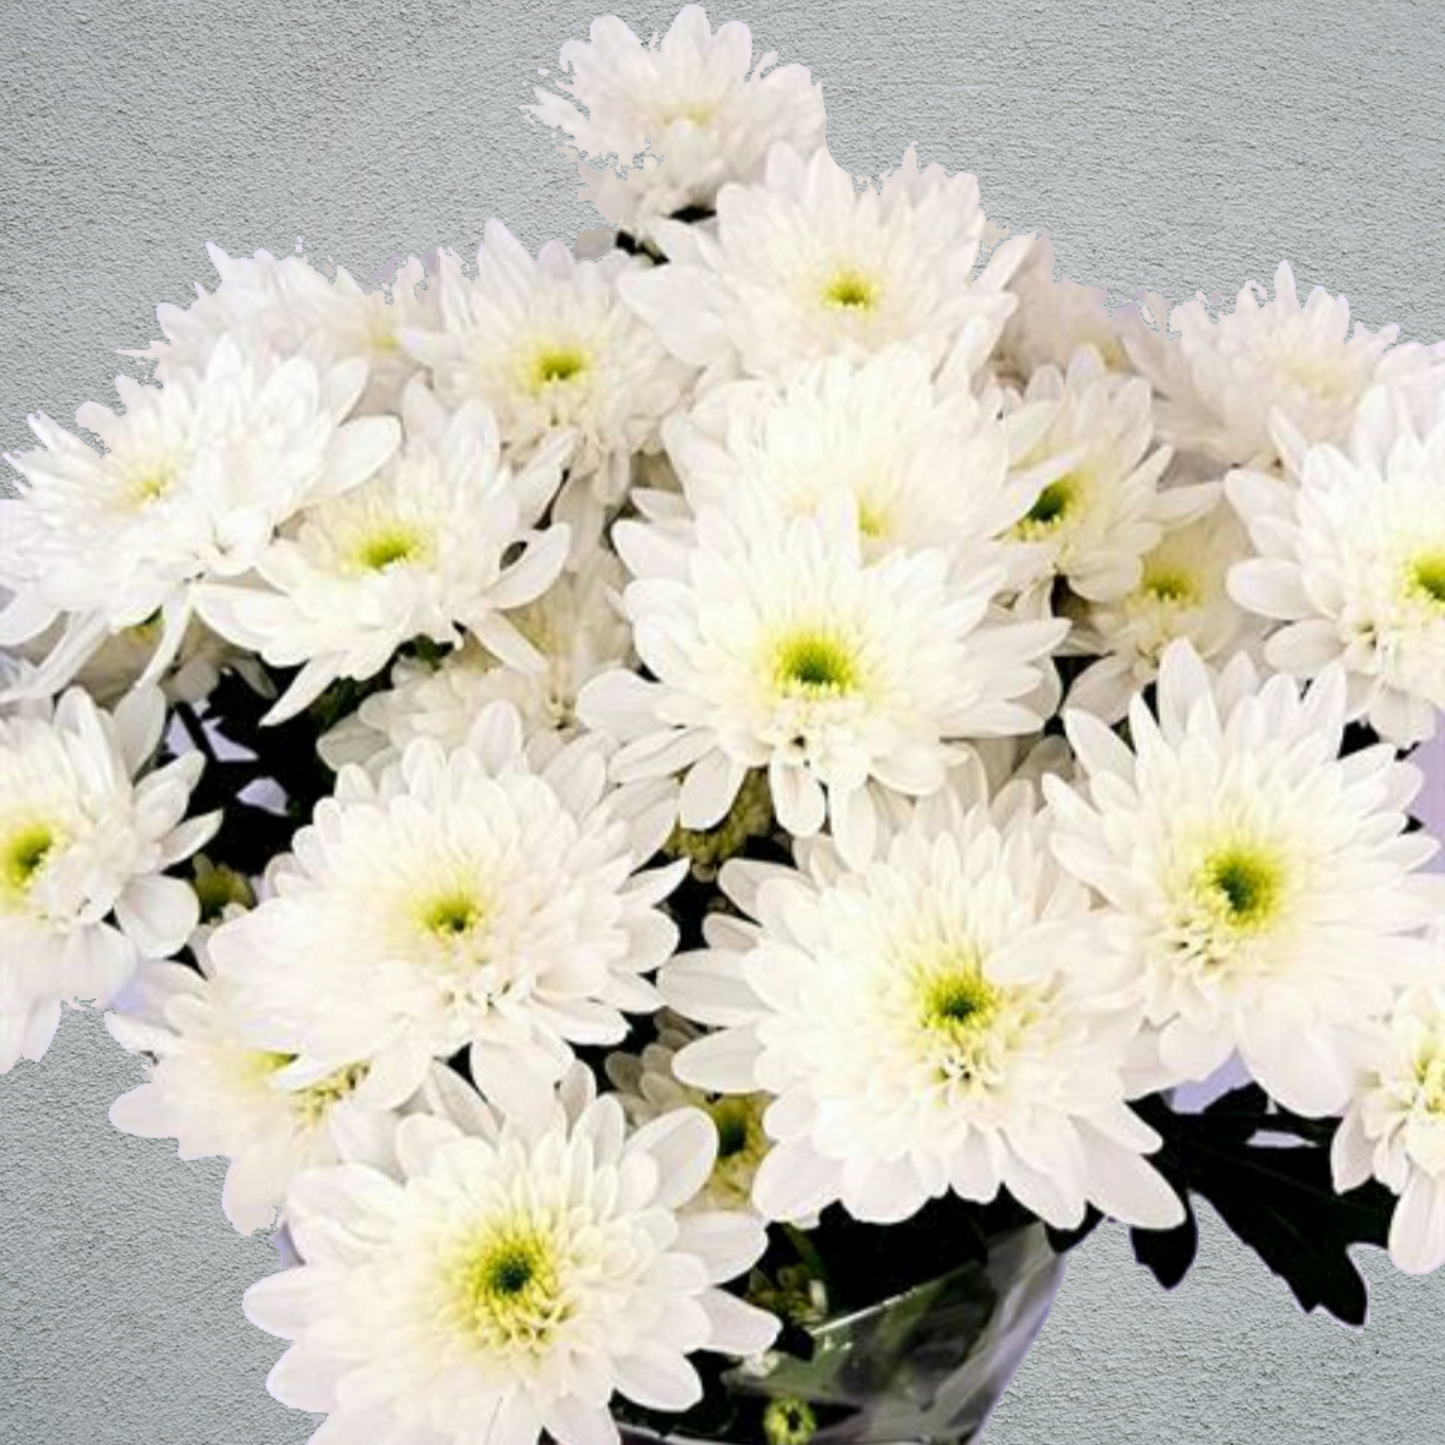 Chrysanthemum White Doubles (70cm)(×5 Stems) Variety: Bonita